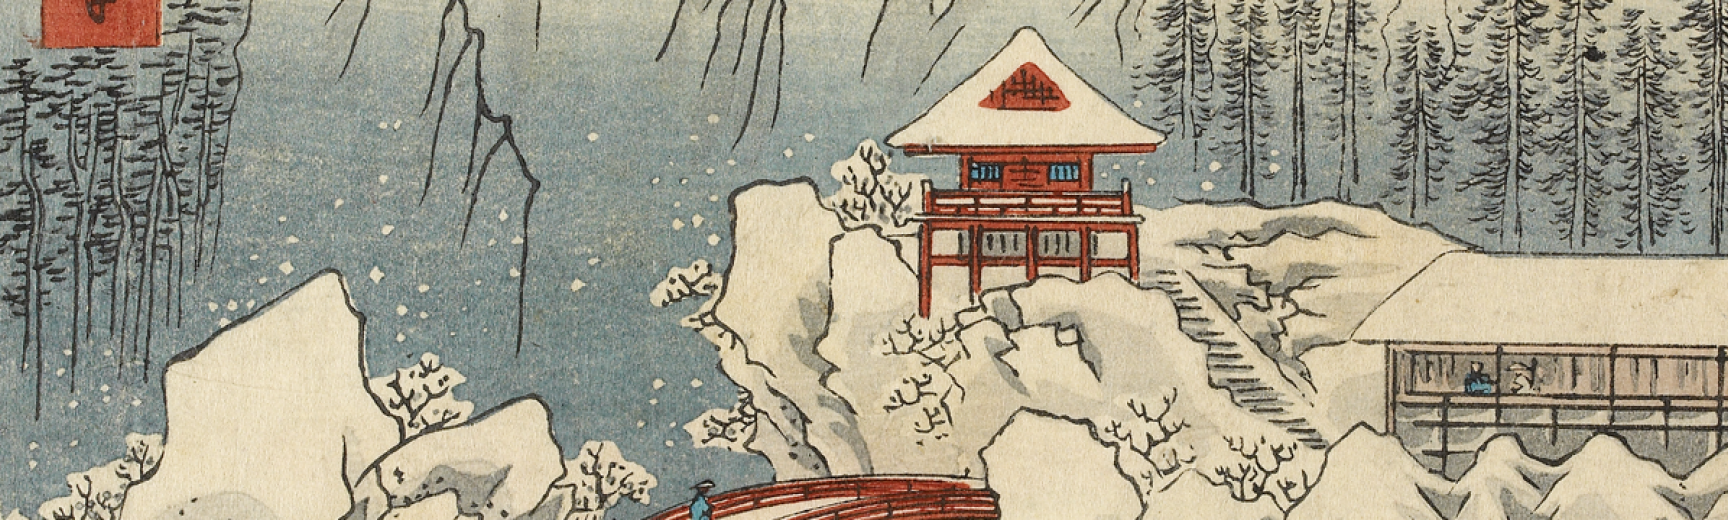 Hiroshige's Snow on Mount Haruna